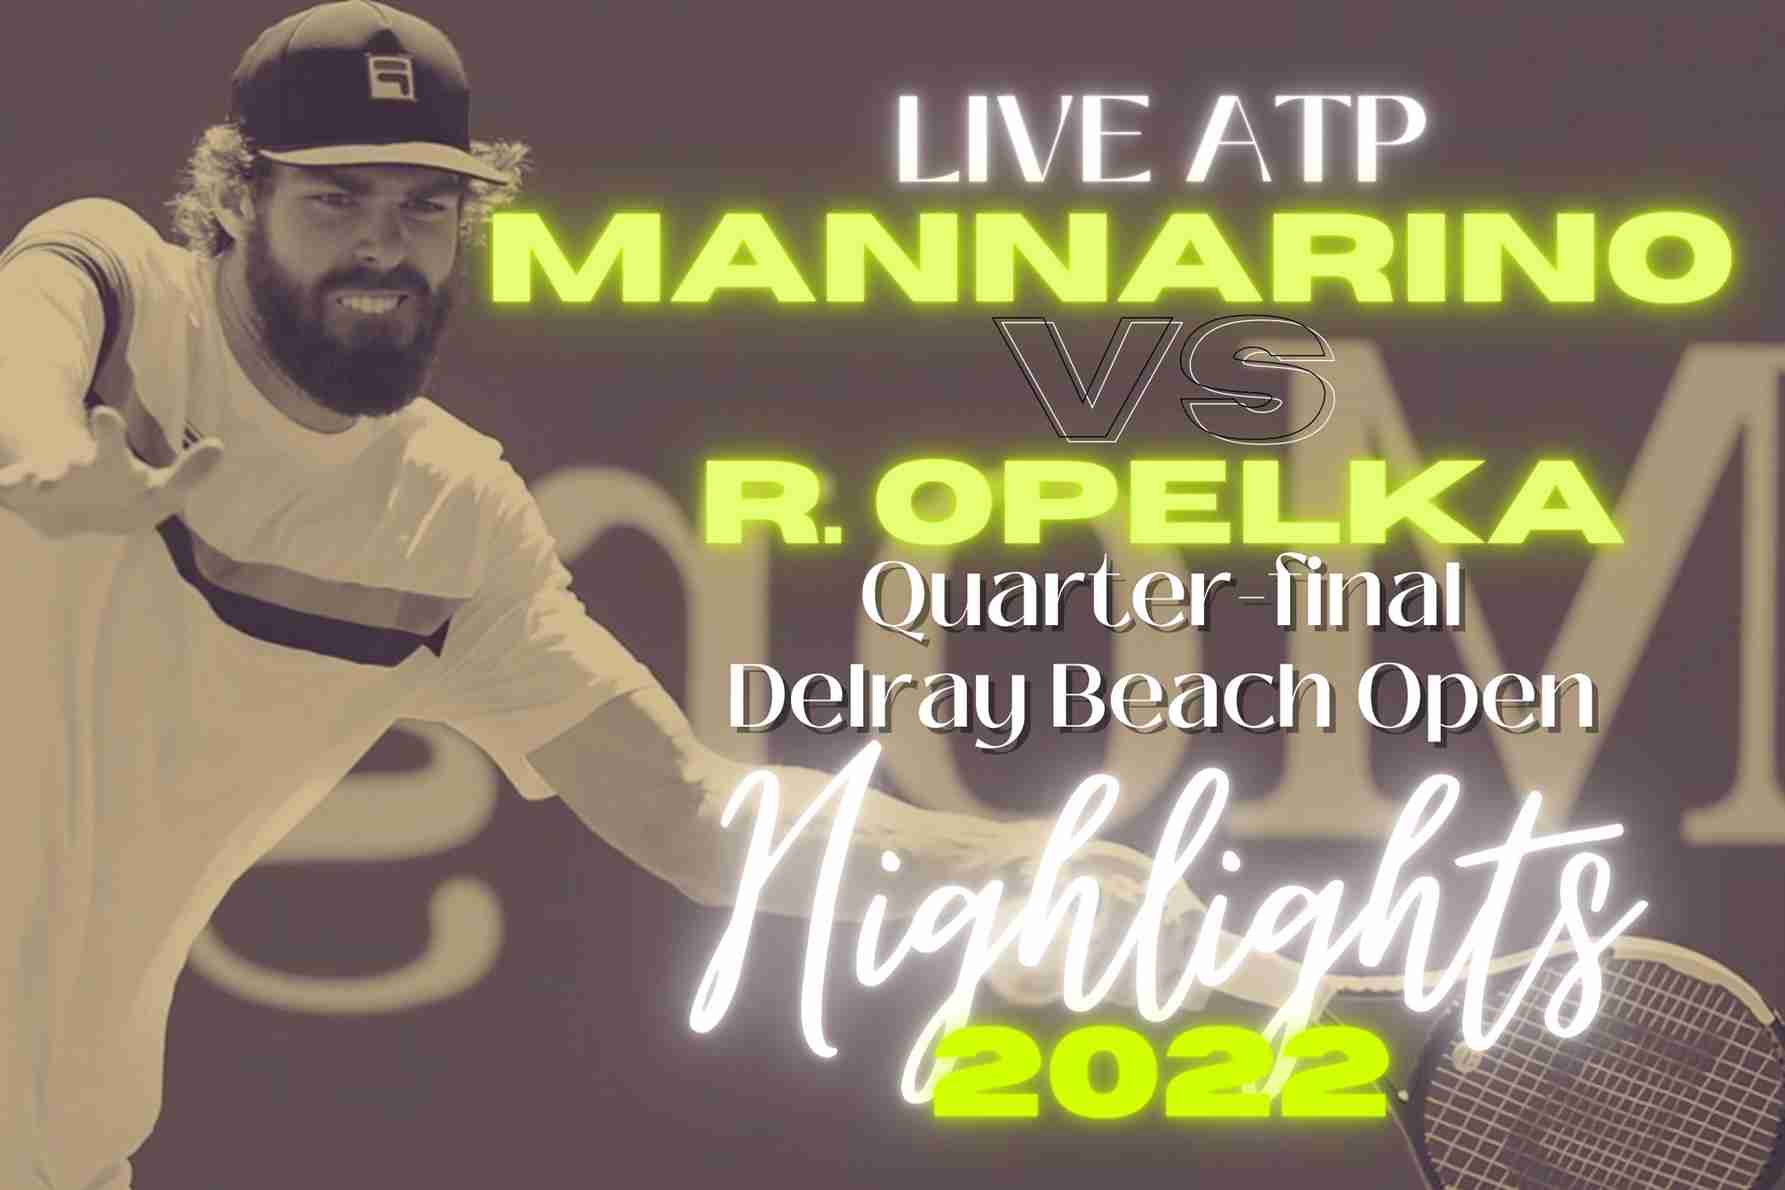 Mannarino Vs Opelka Quarterfinal 2022 Highlights